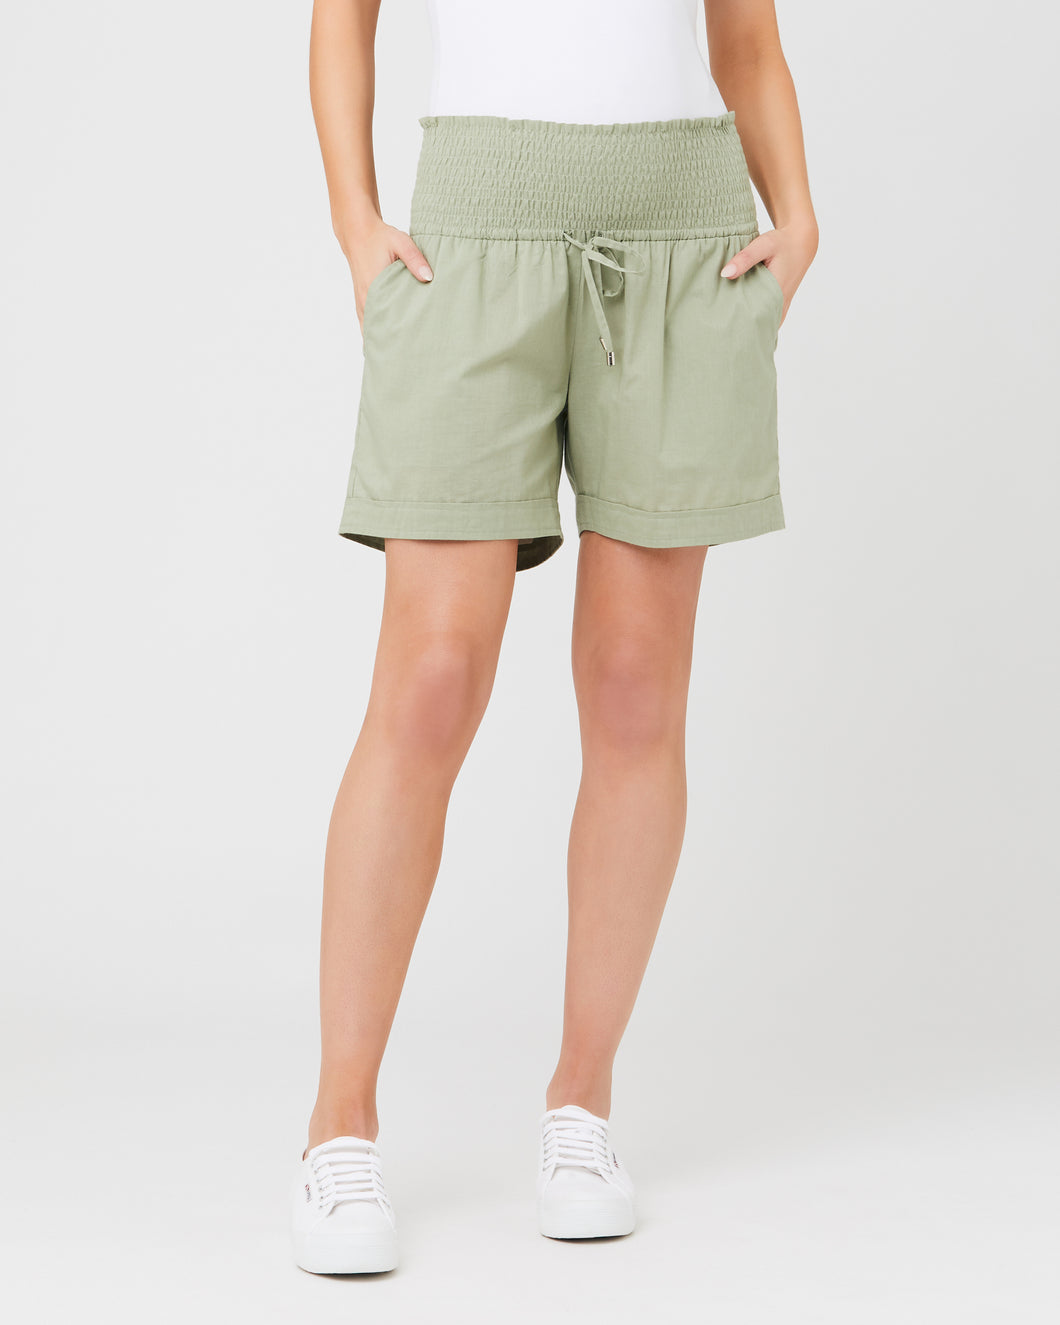 Ripe Maternity - Philly cotton shorts leaf XS  | MILD zwangerschapsboetiek - zwangerschapskleding bij Mechelen